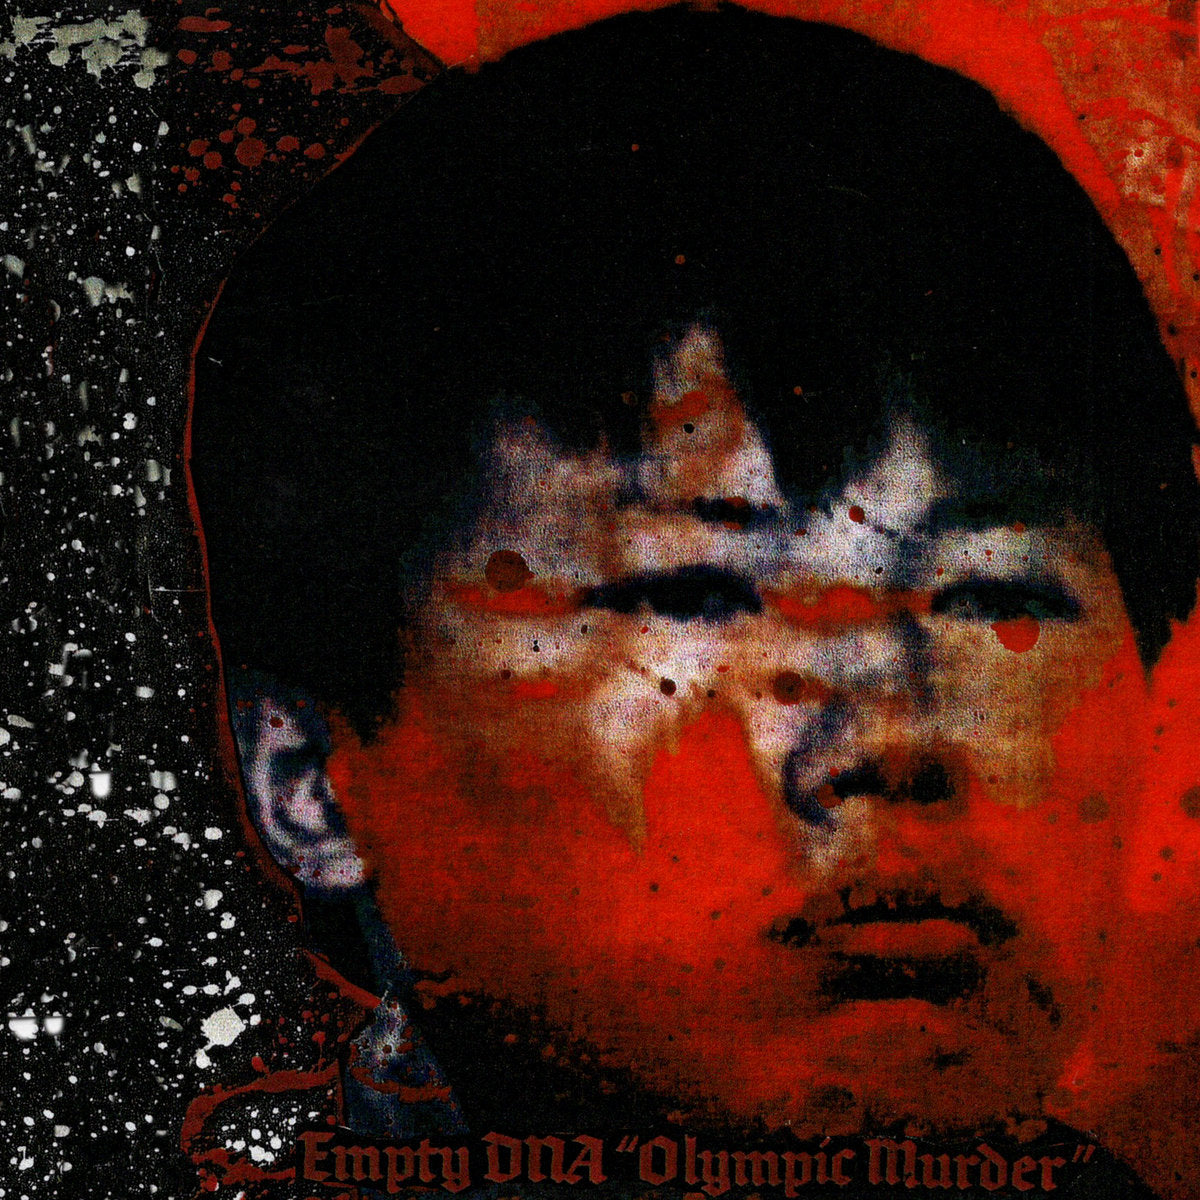 Empty DNA - Olympic Murder CS